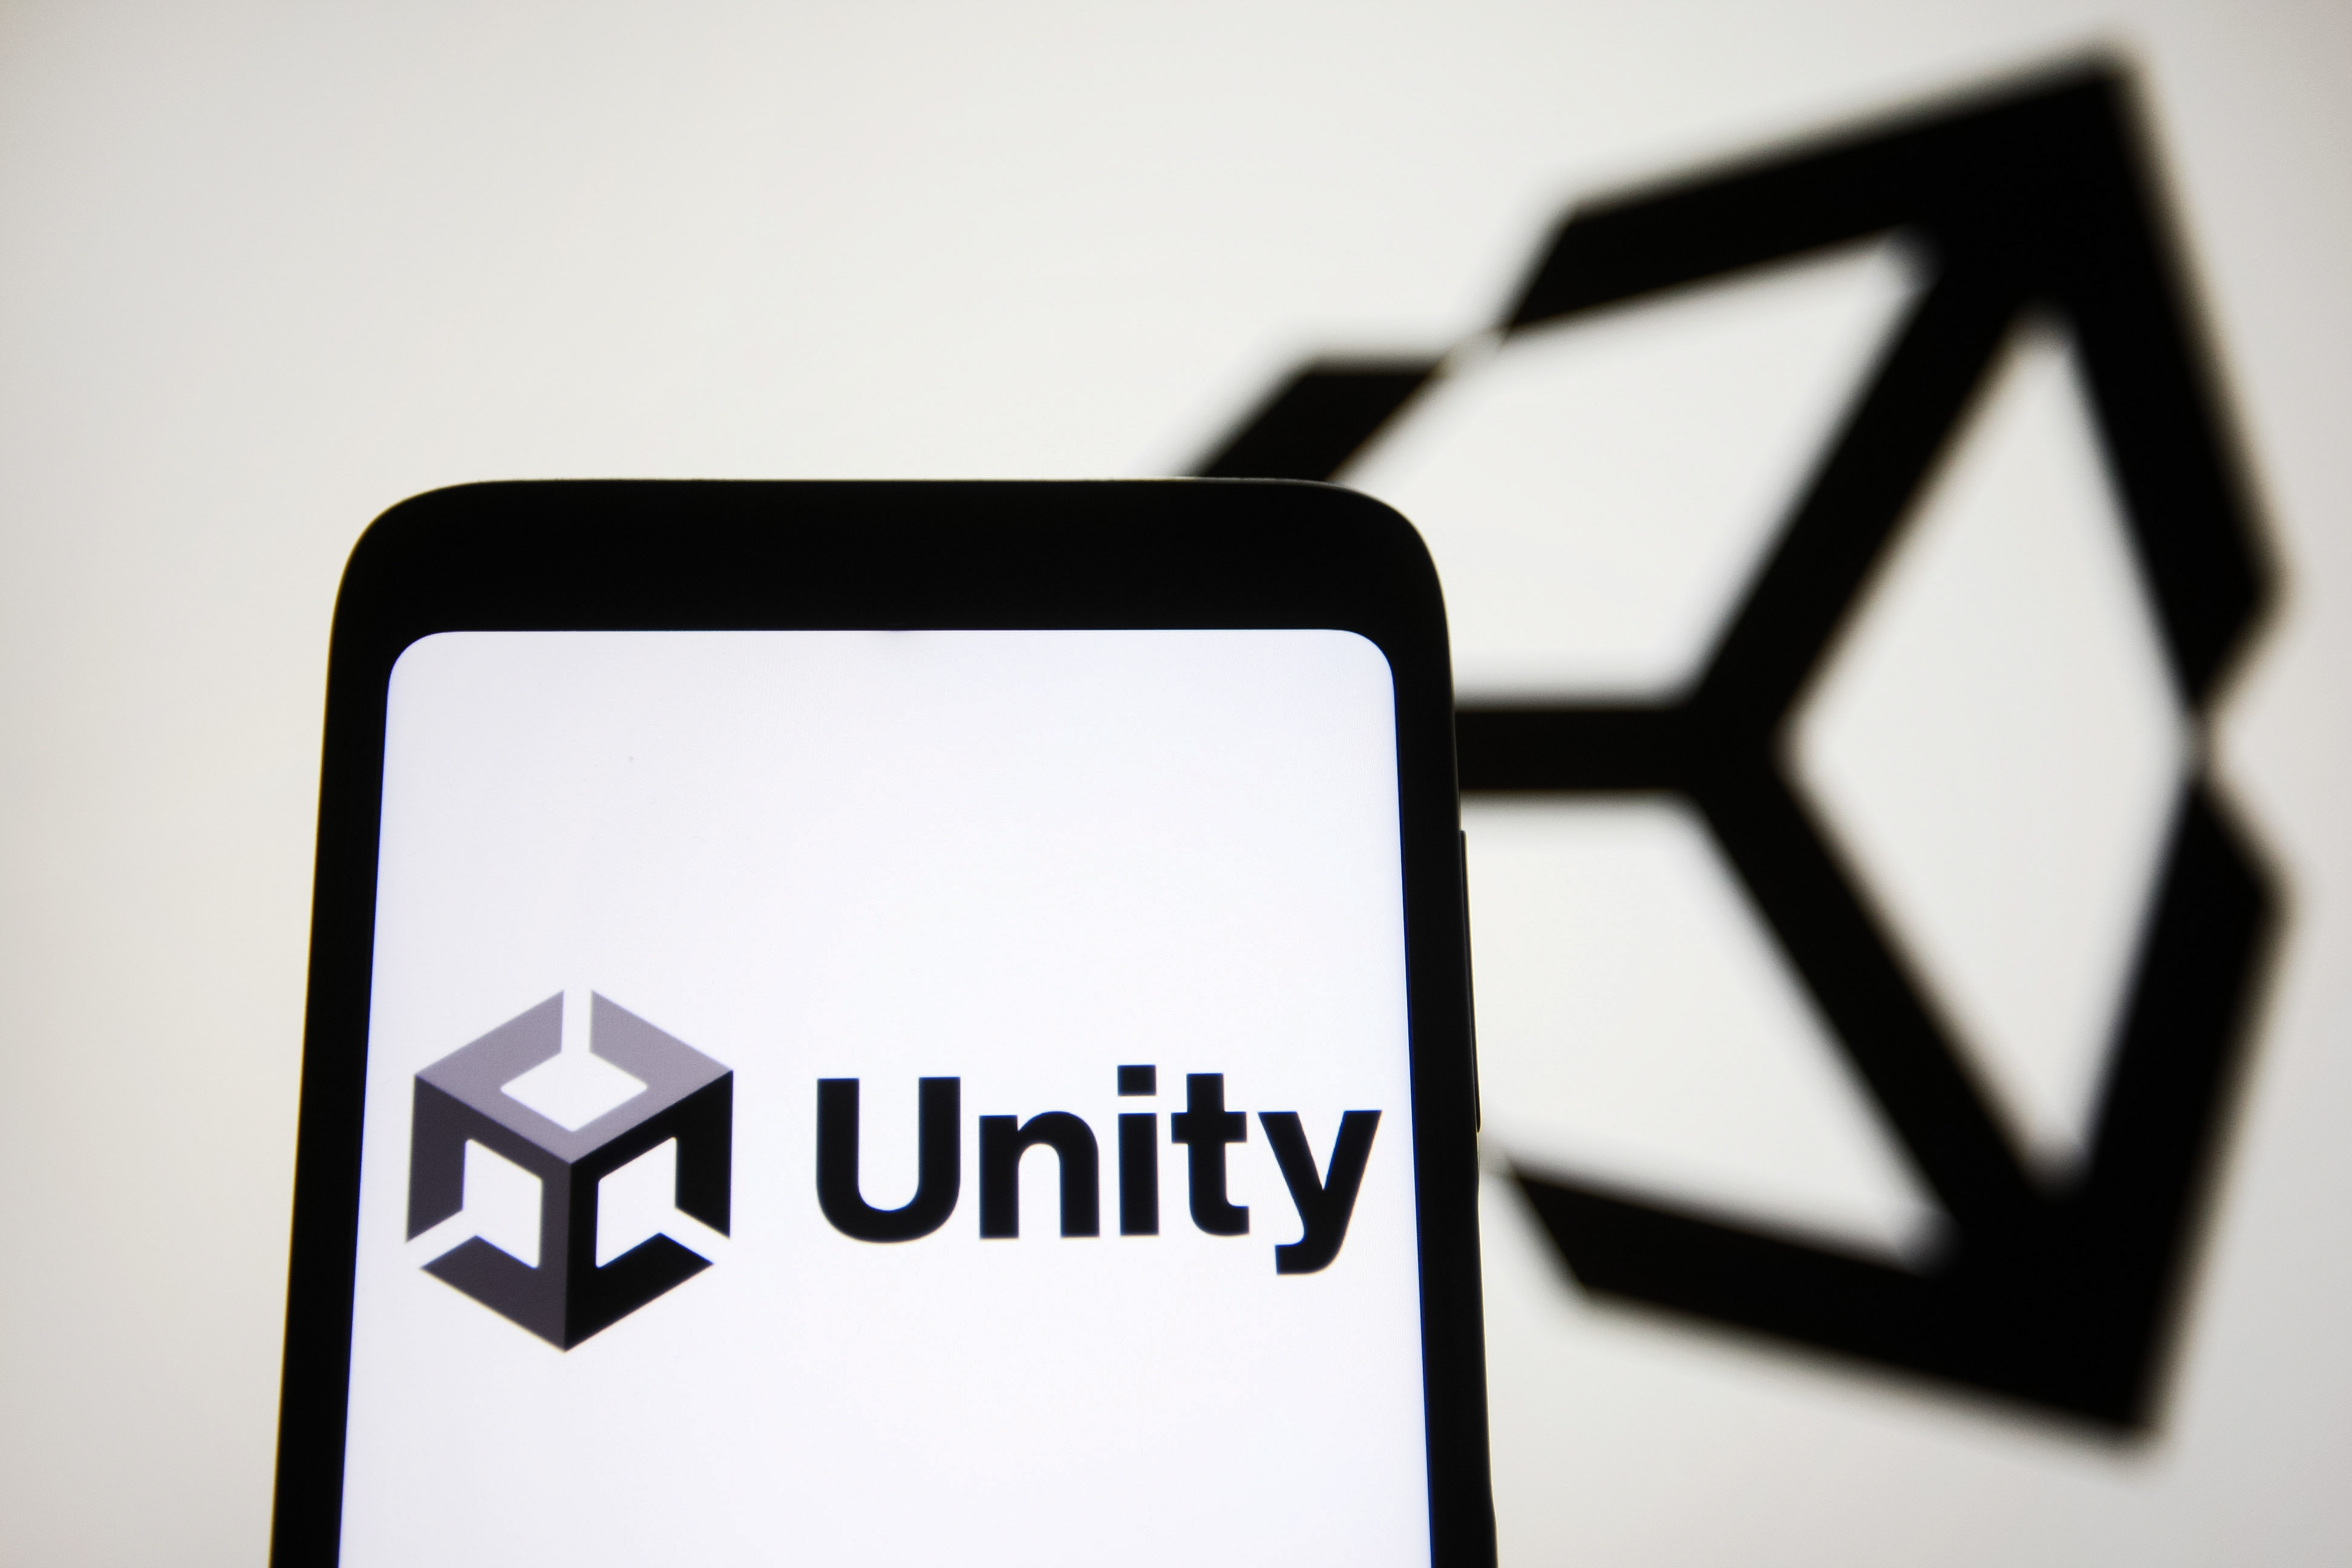 Unity цены. Unity изображения. Unity объединилась с. Unity sign. Знак Юнити на ноуте.